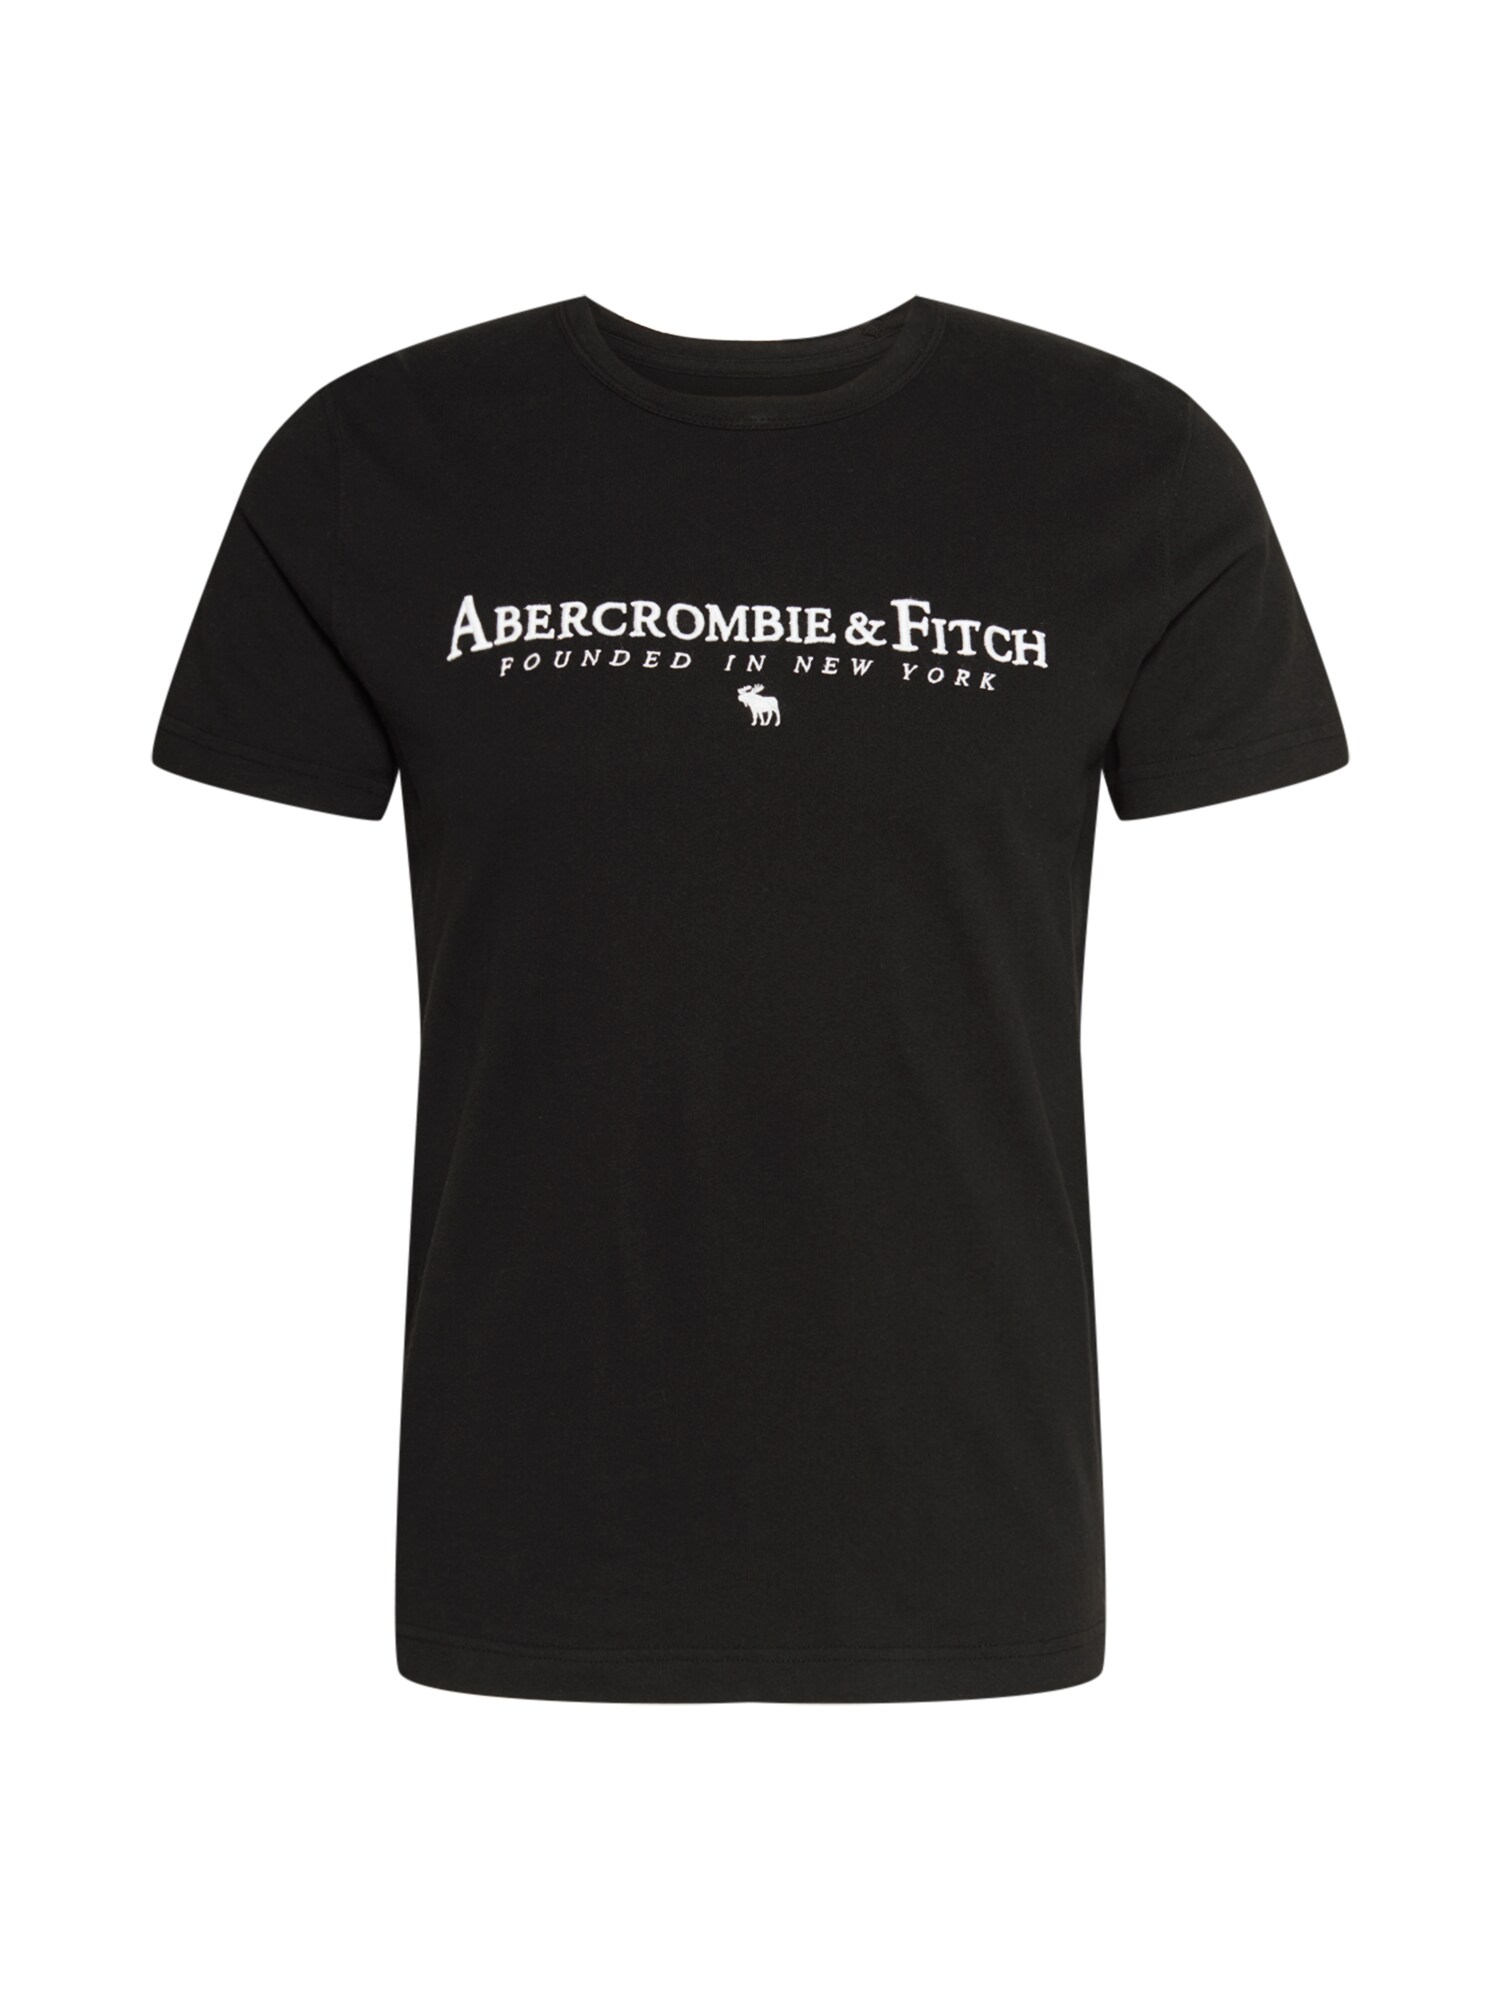 Abercrombie & Fitch Camisa  preto / branco